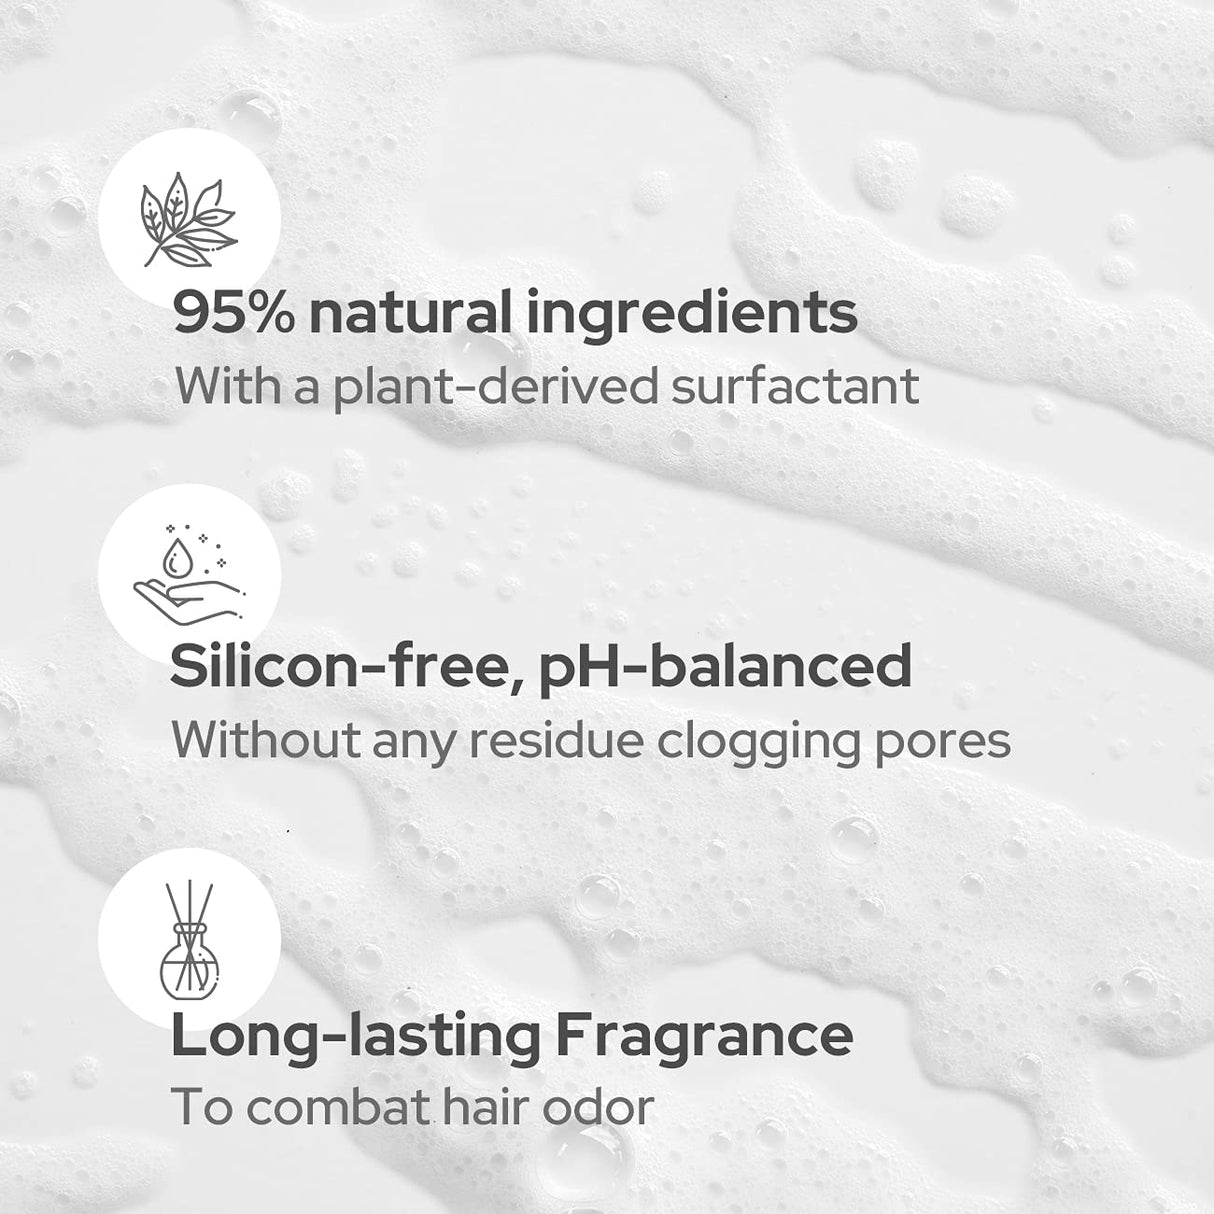 DUFT&DOFT Pink Breeze Perfumed Hair Shampoo (500ml) - UShops